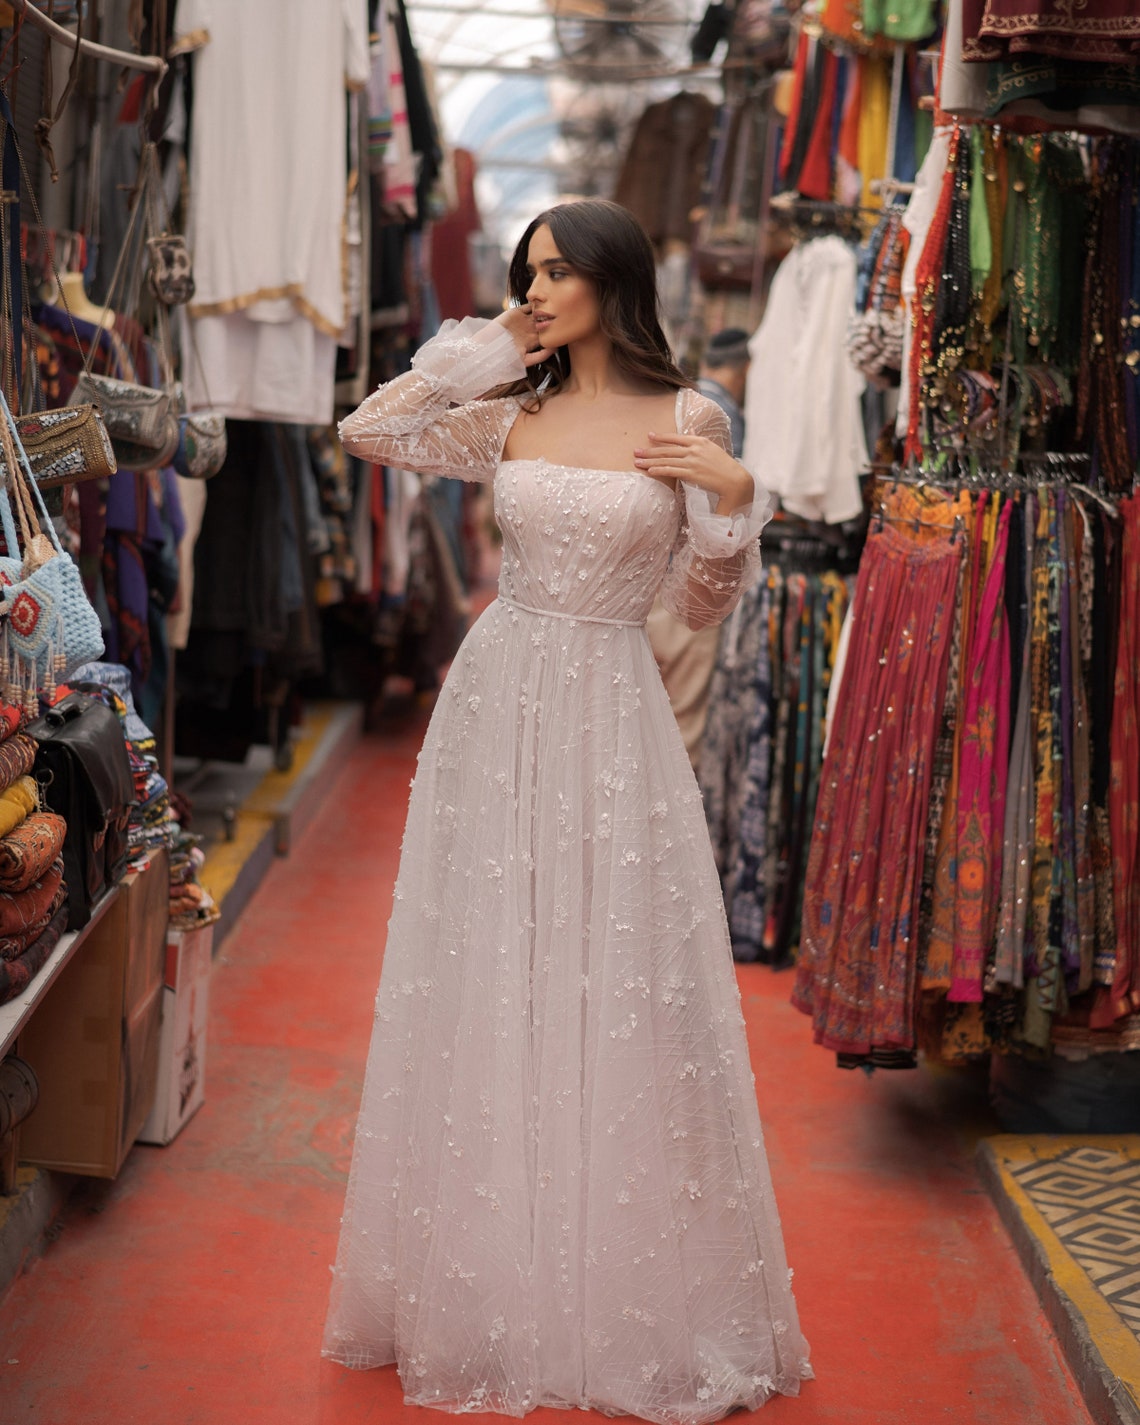 Sheer Long Sleeves Weding Dress Floral Lace Wedding Dress image 3